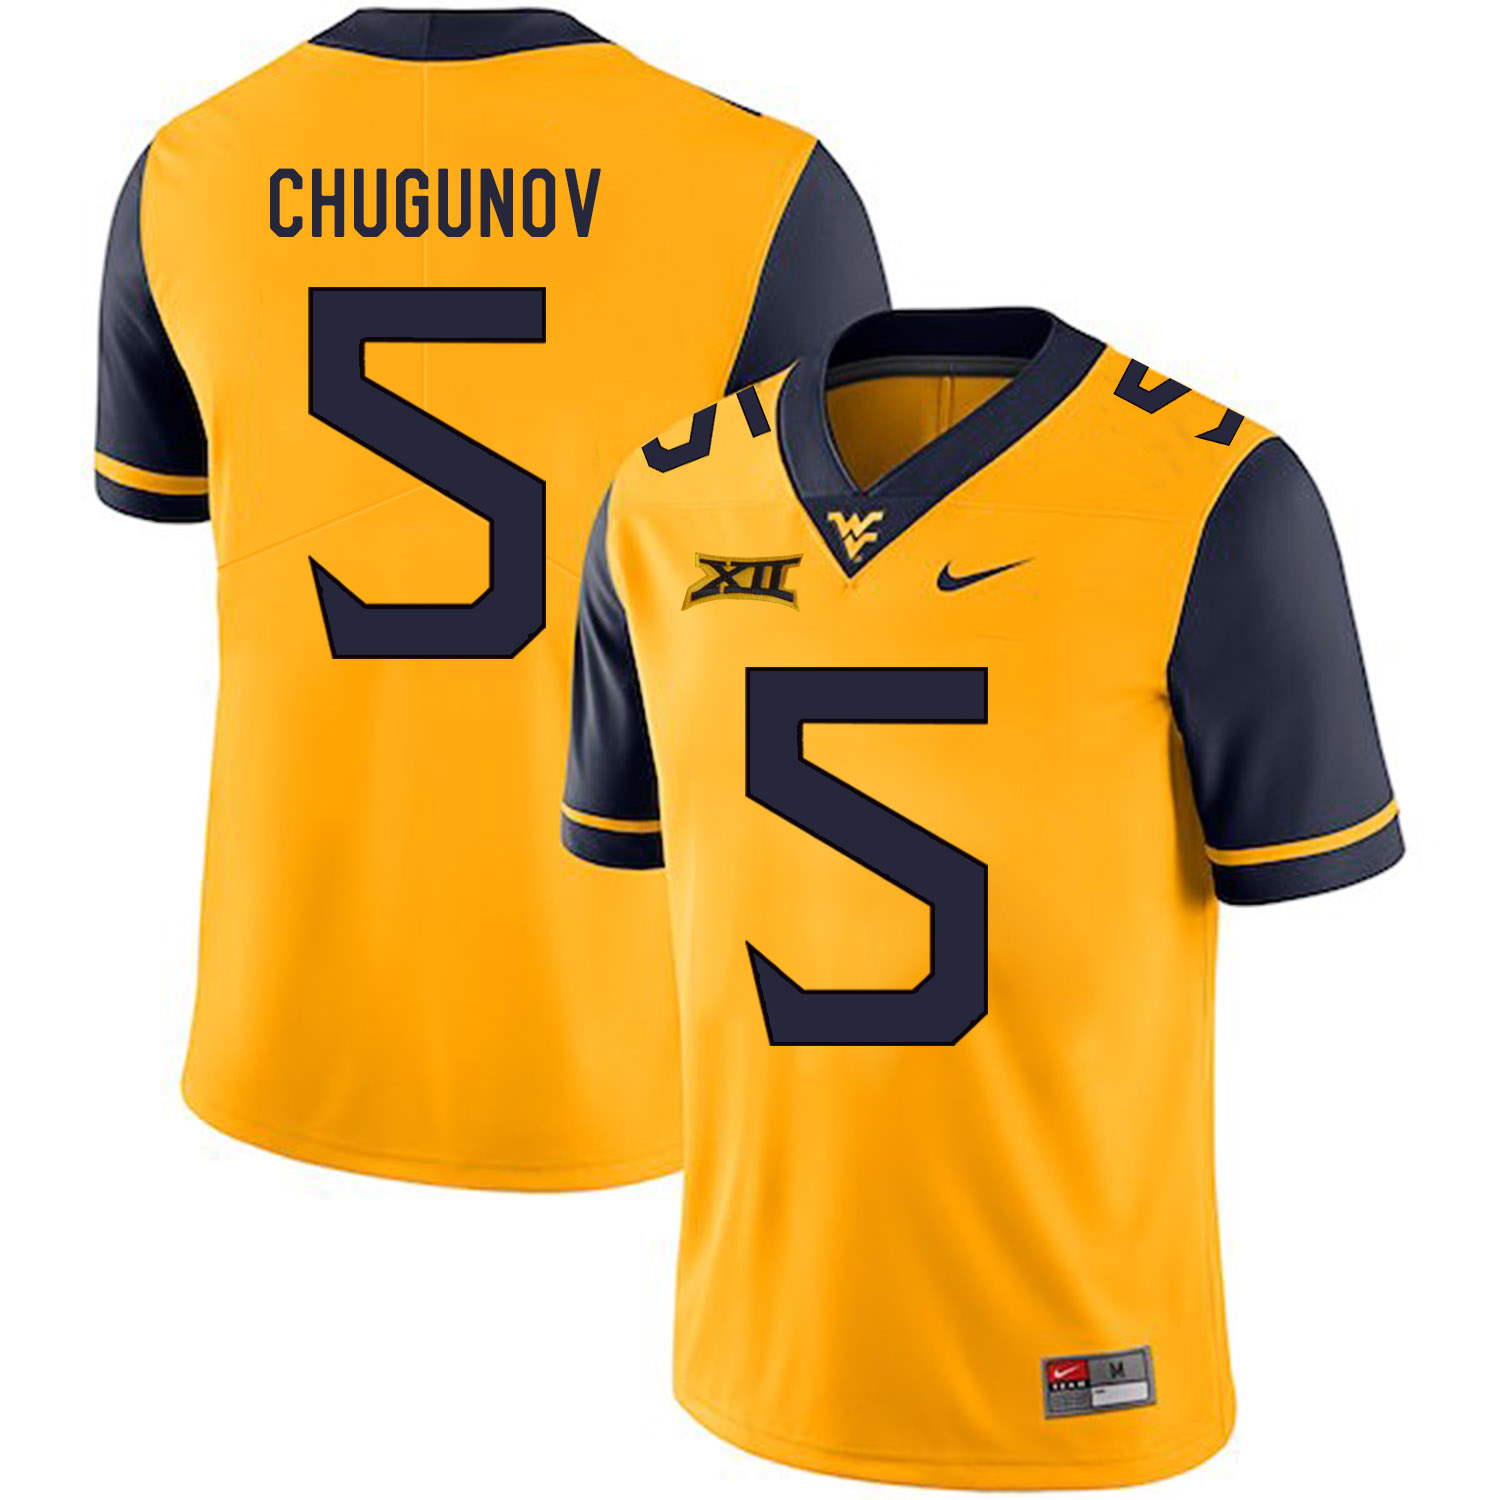 West Virginia Mountaineers 5 Chris Chugunov Gold College Football Jersey